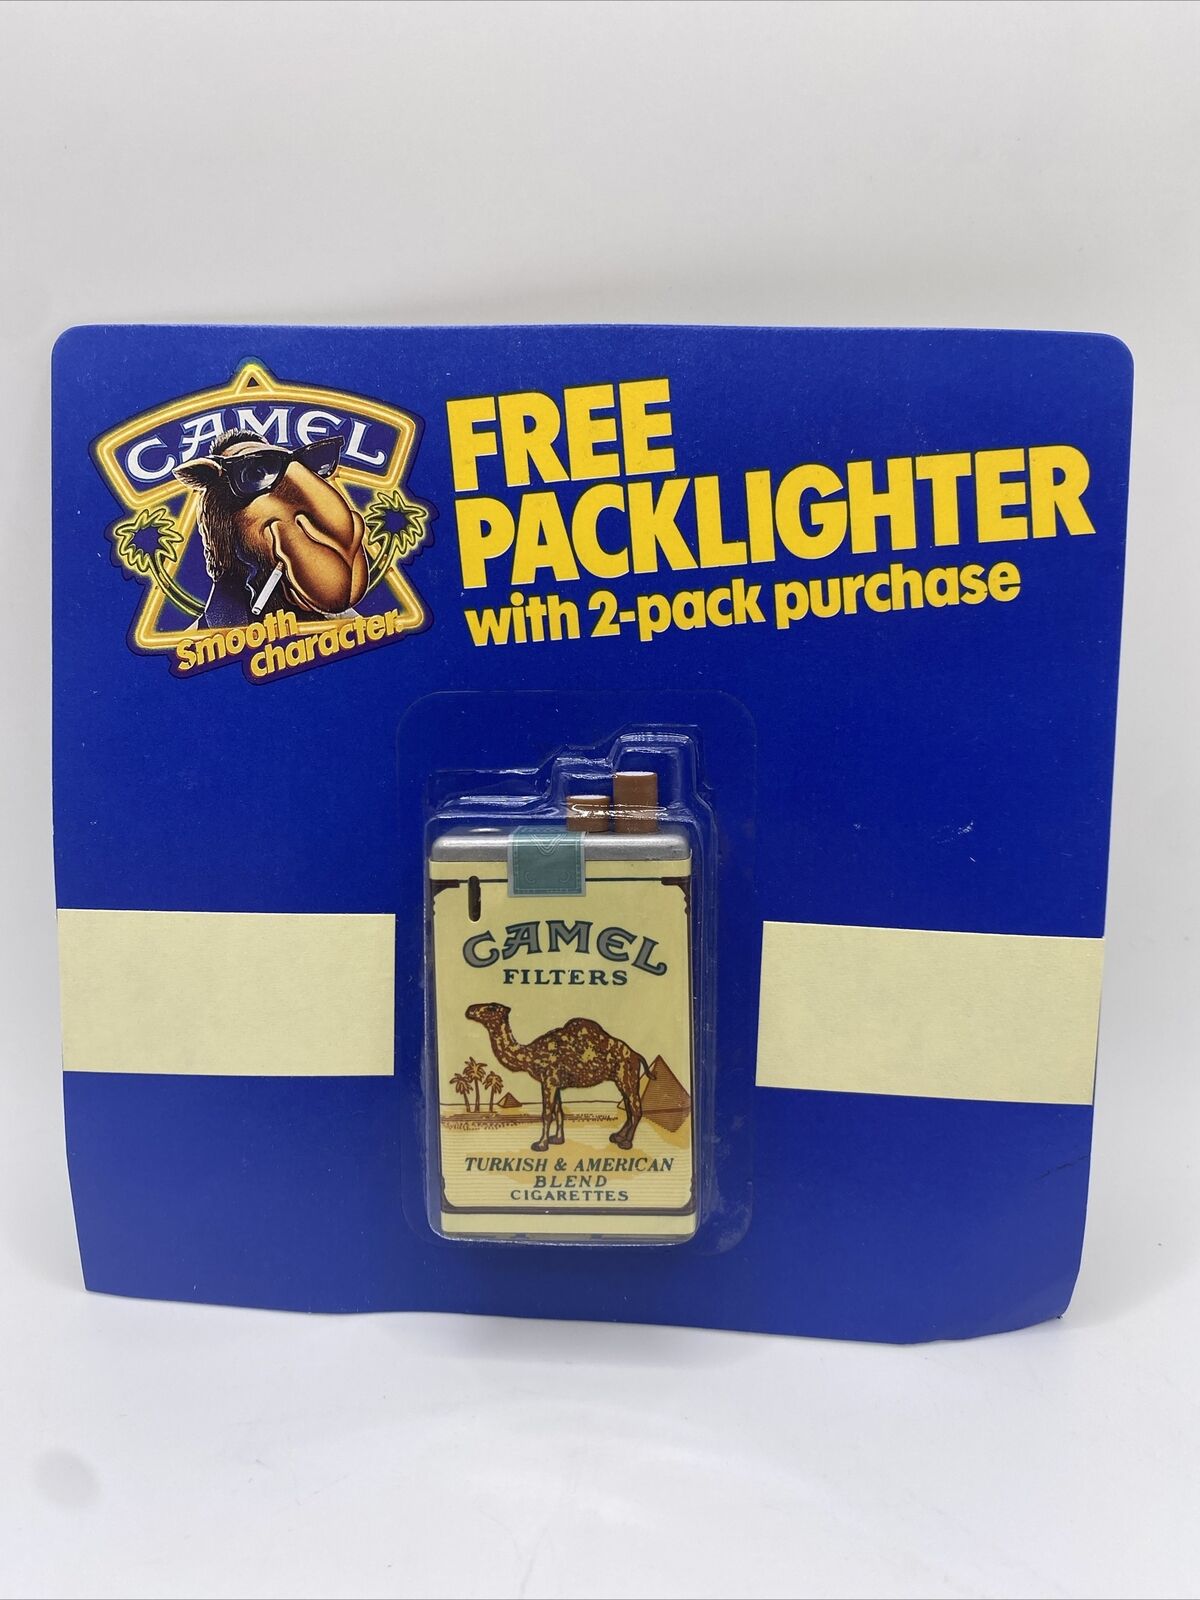 Vintage Joe Camel pack lighter - Original Packaging - 1989